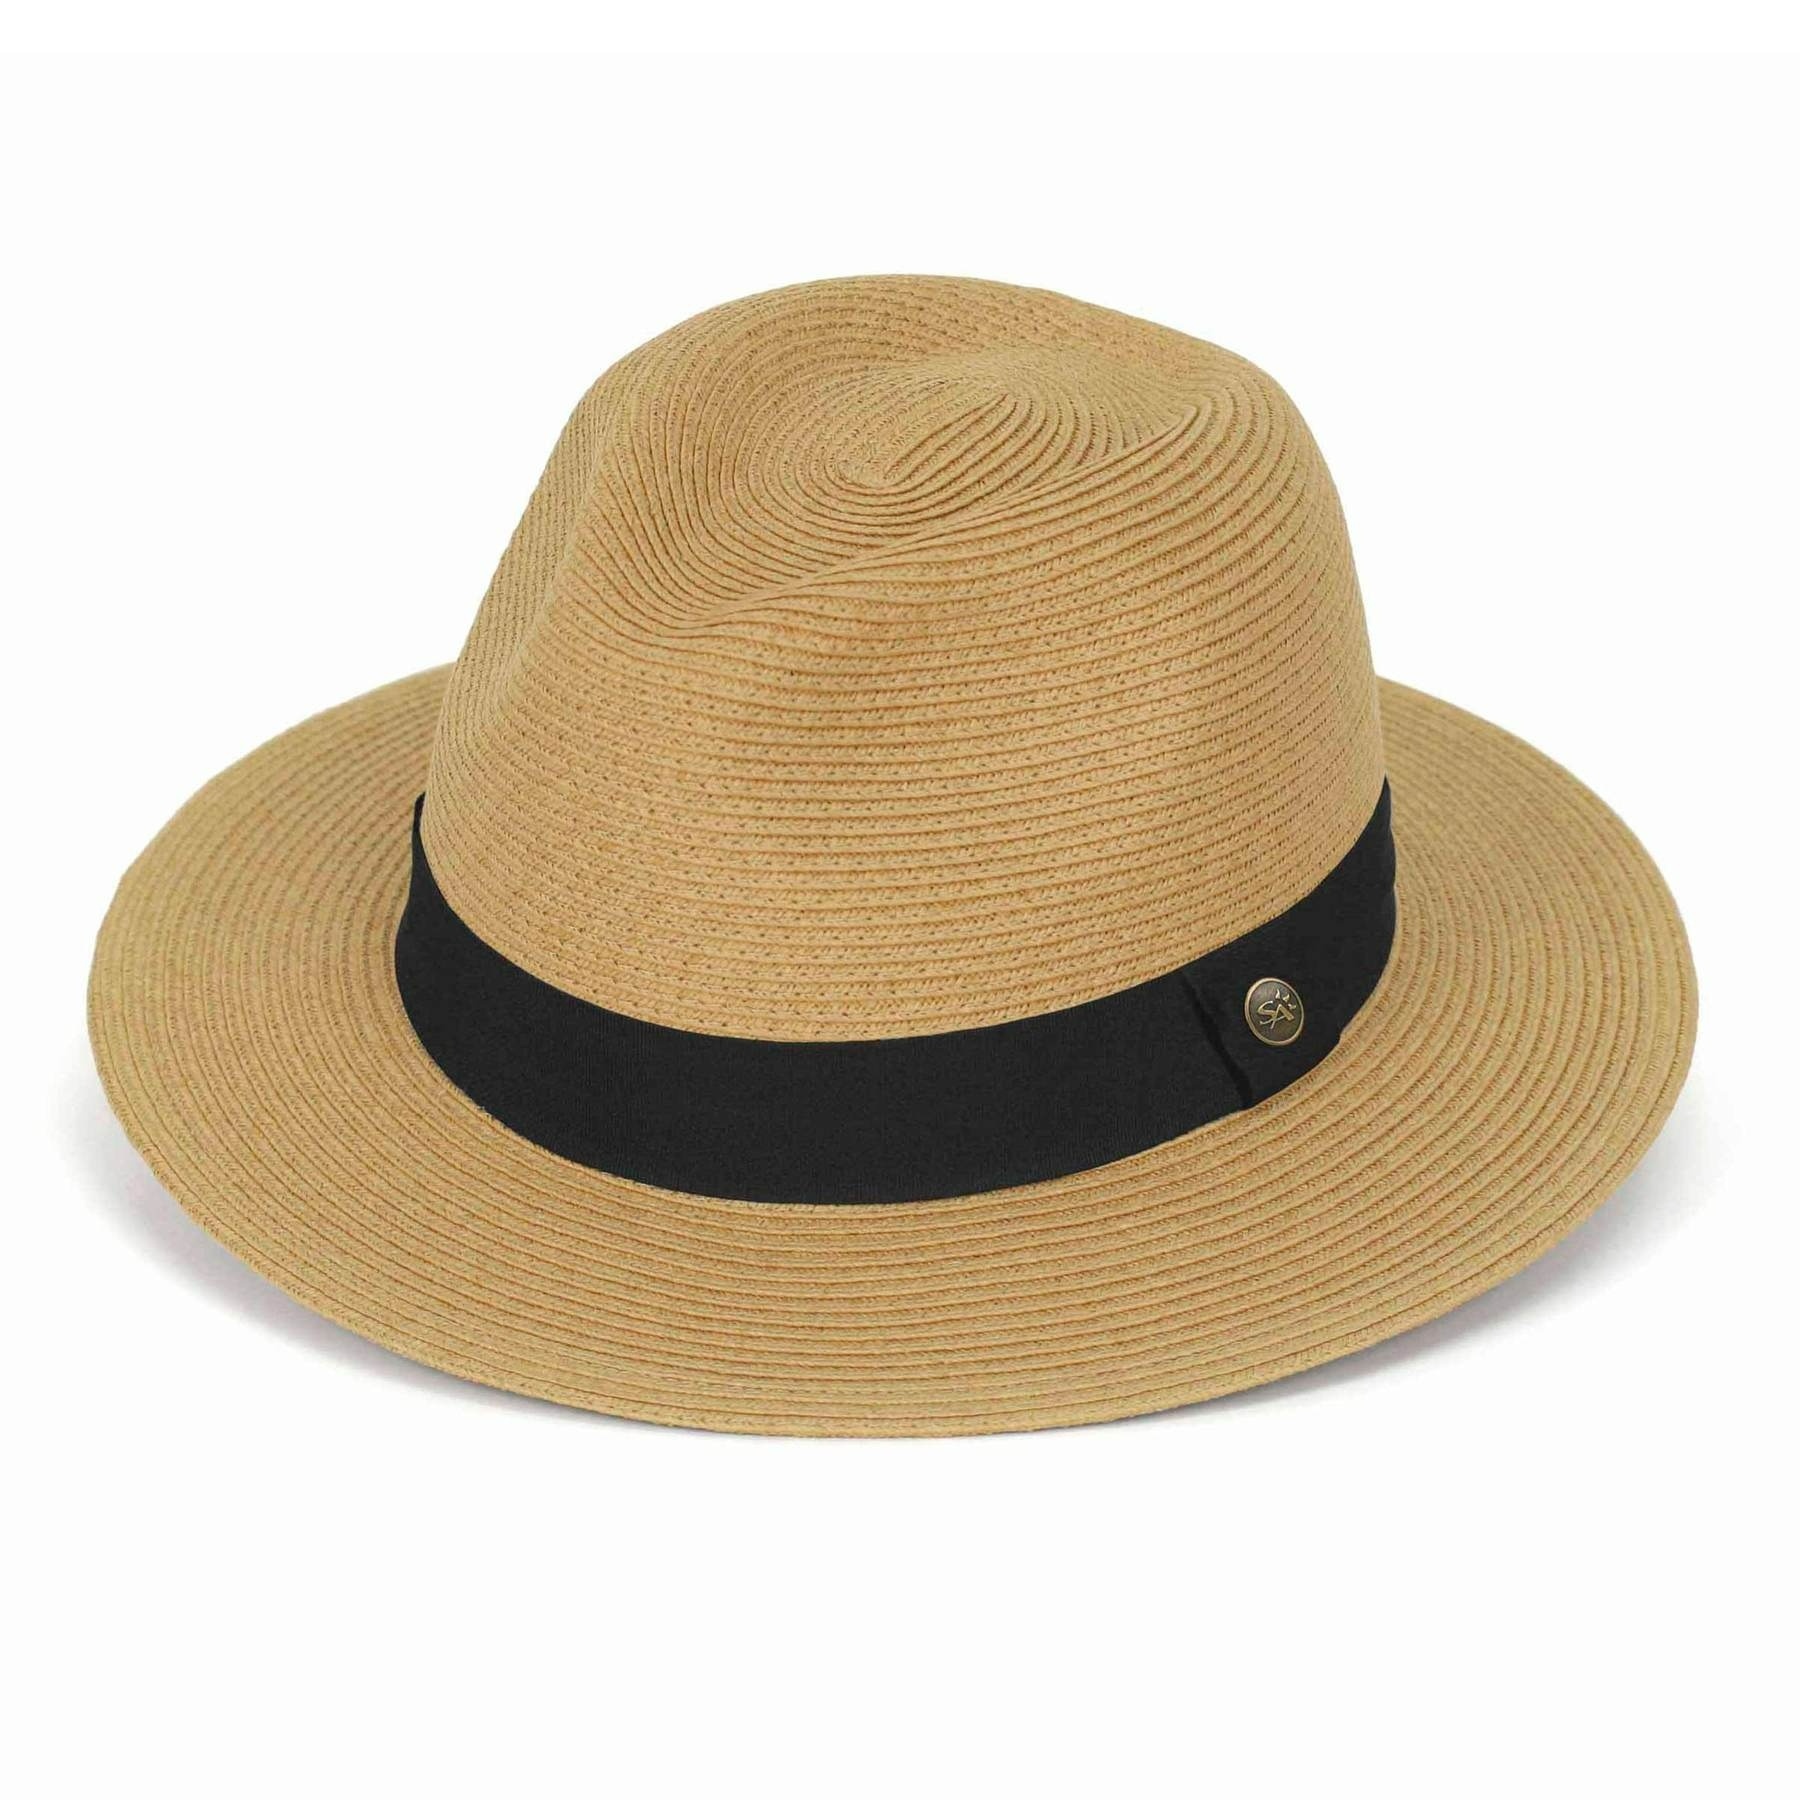 Sombrero Havana Tan L/X (Medlight)